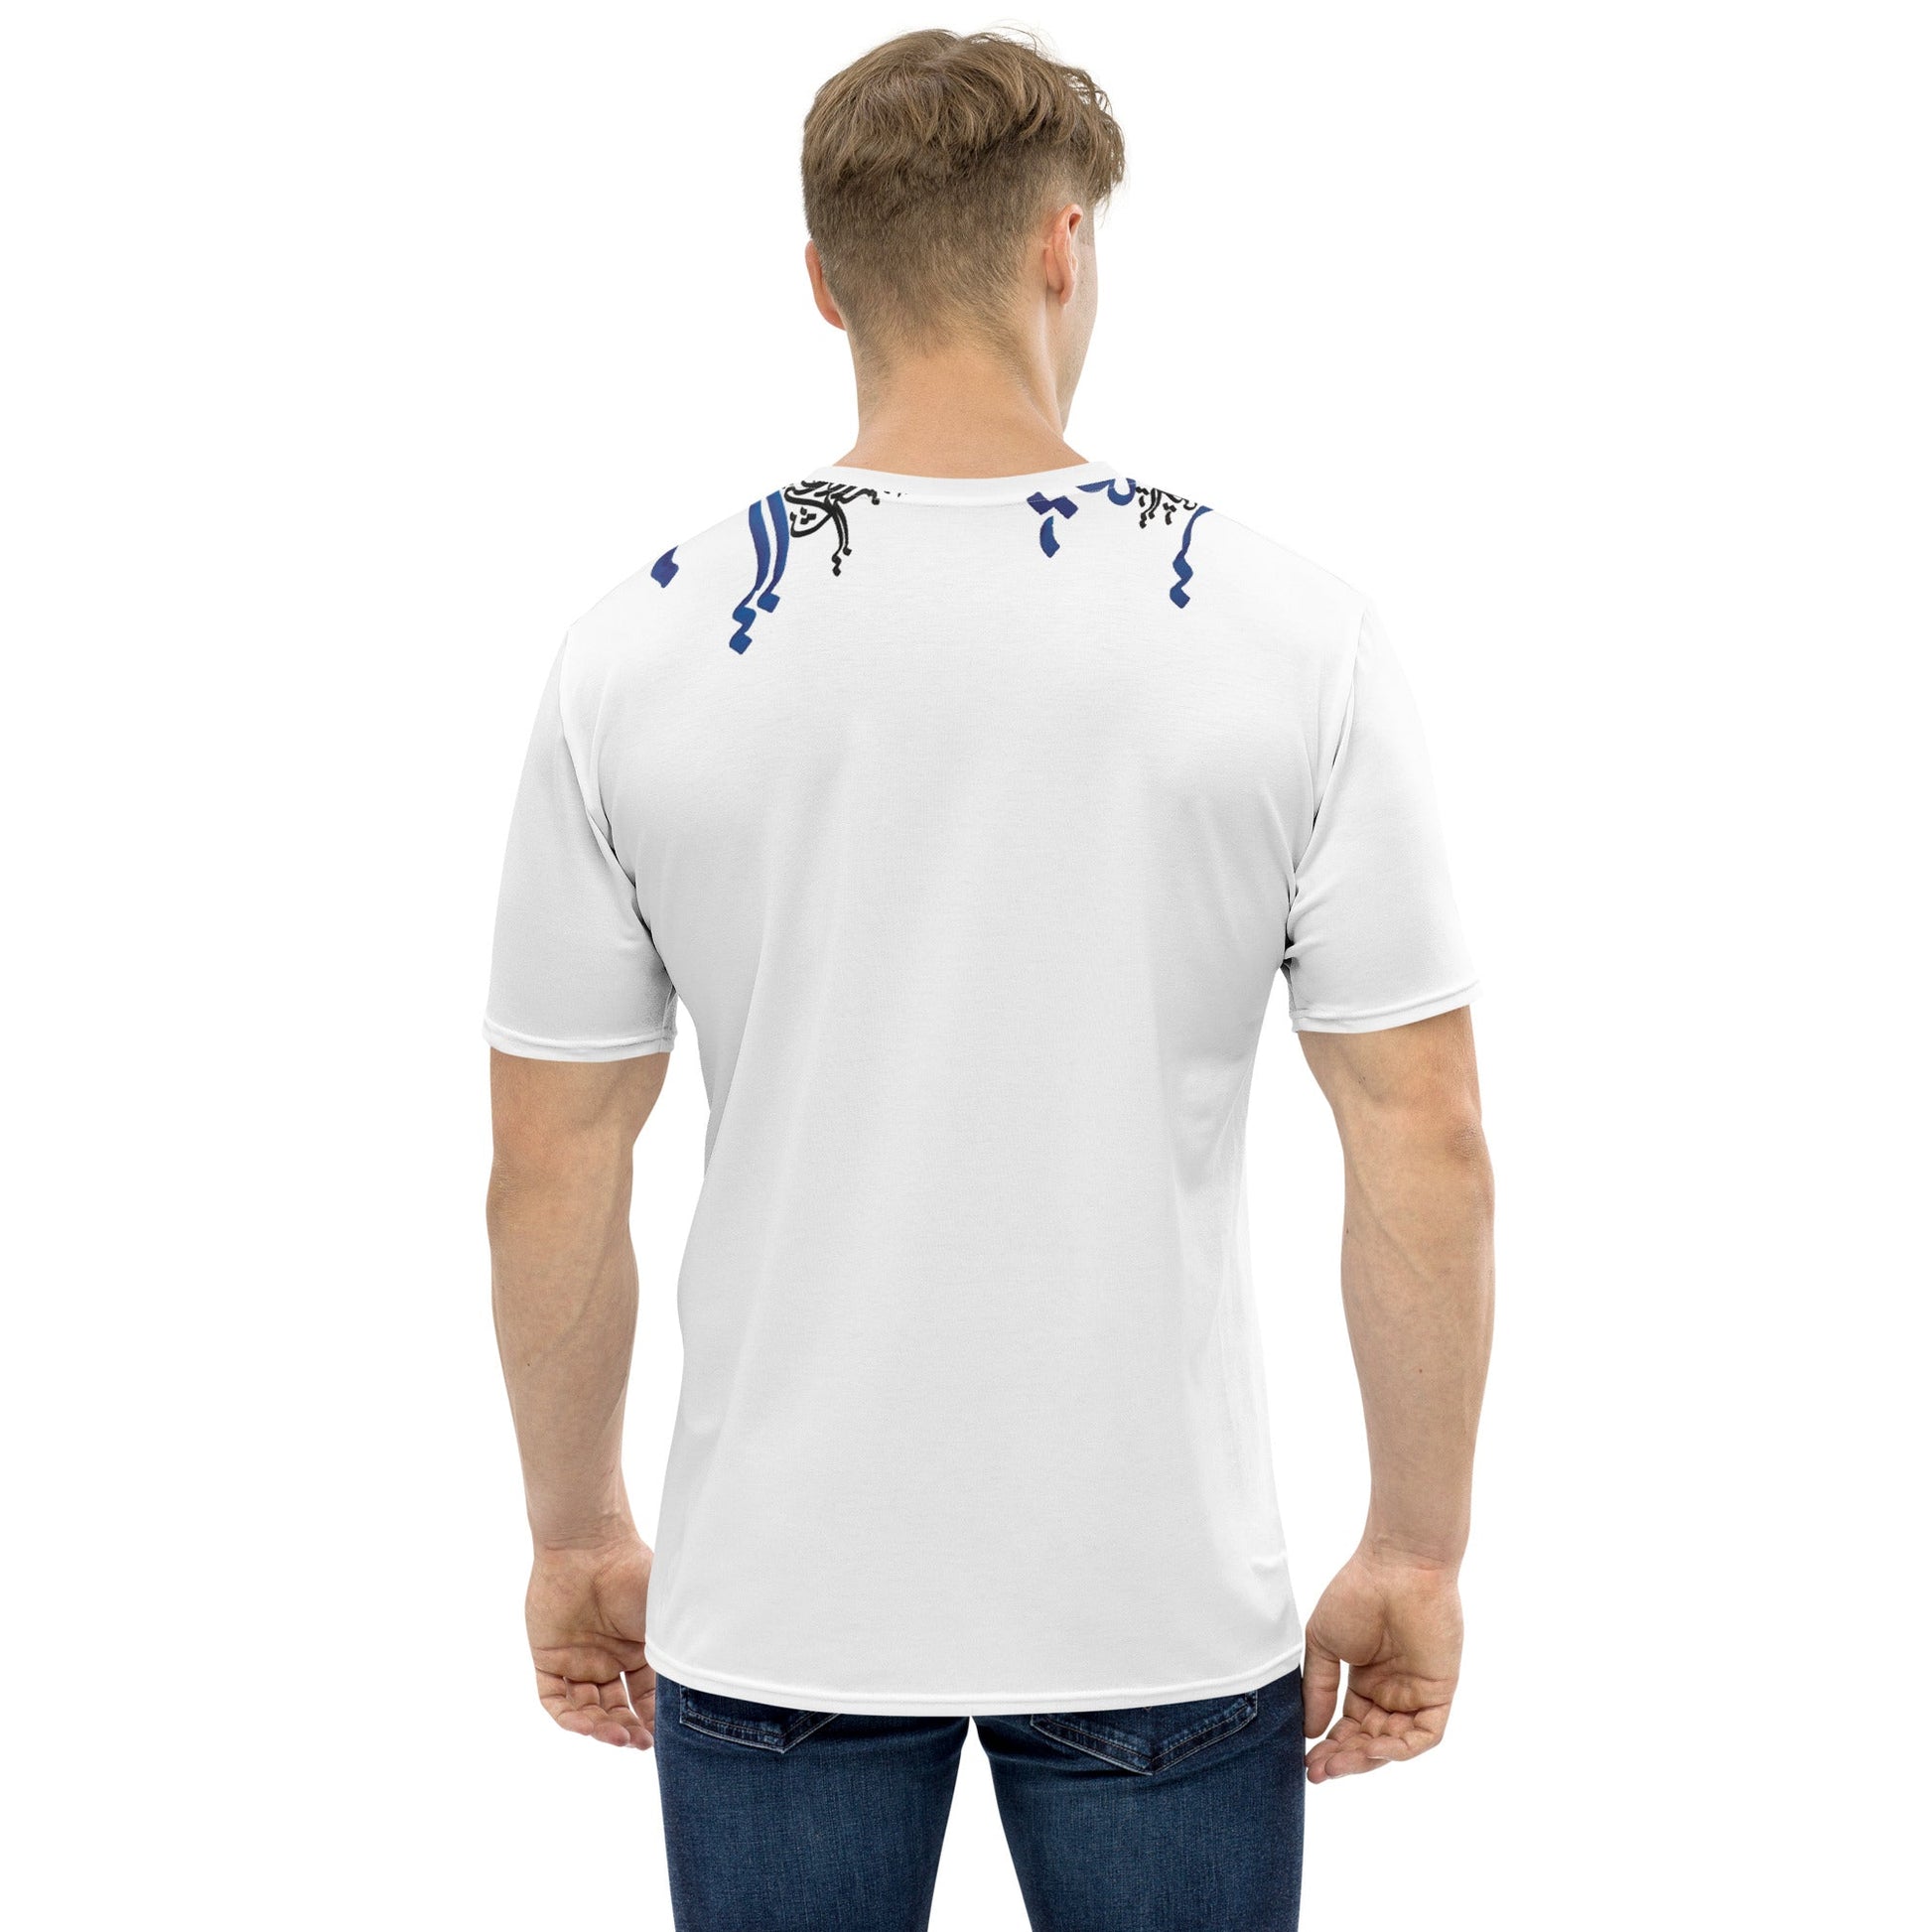 ROYA Premium Men's T-Shirt - Bonotee